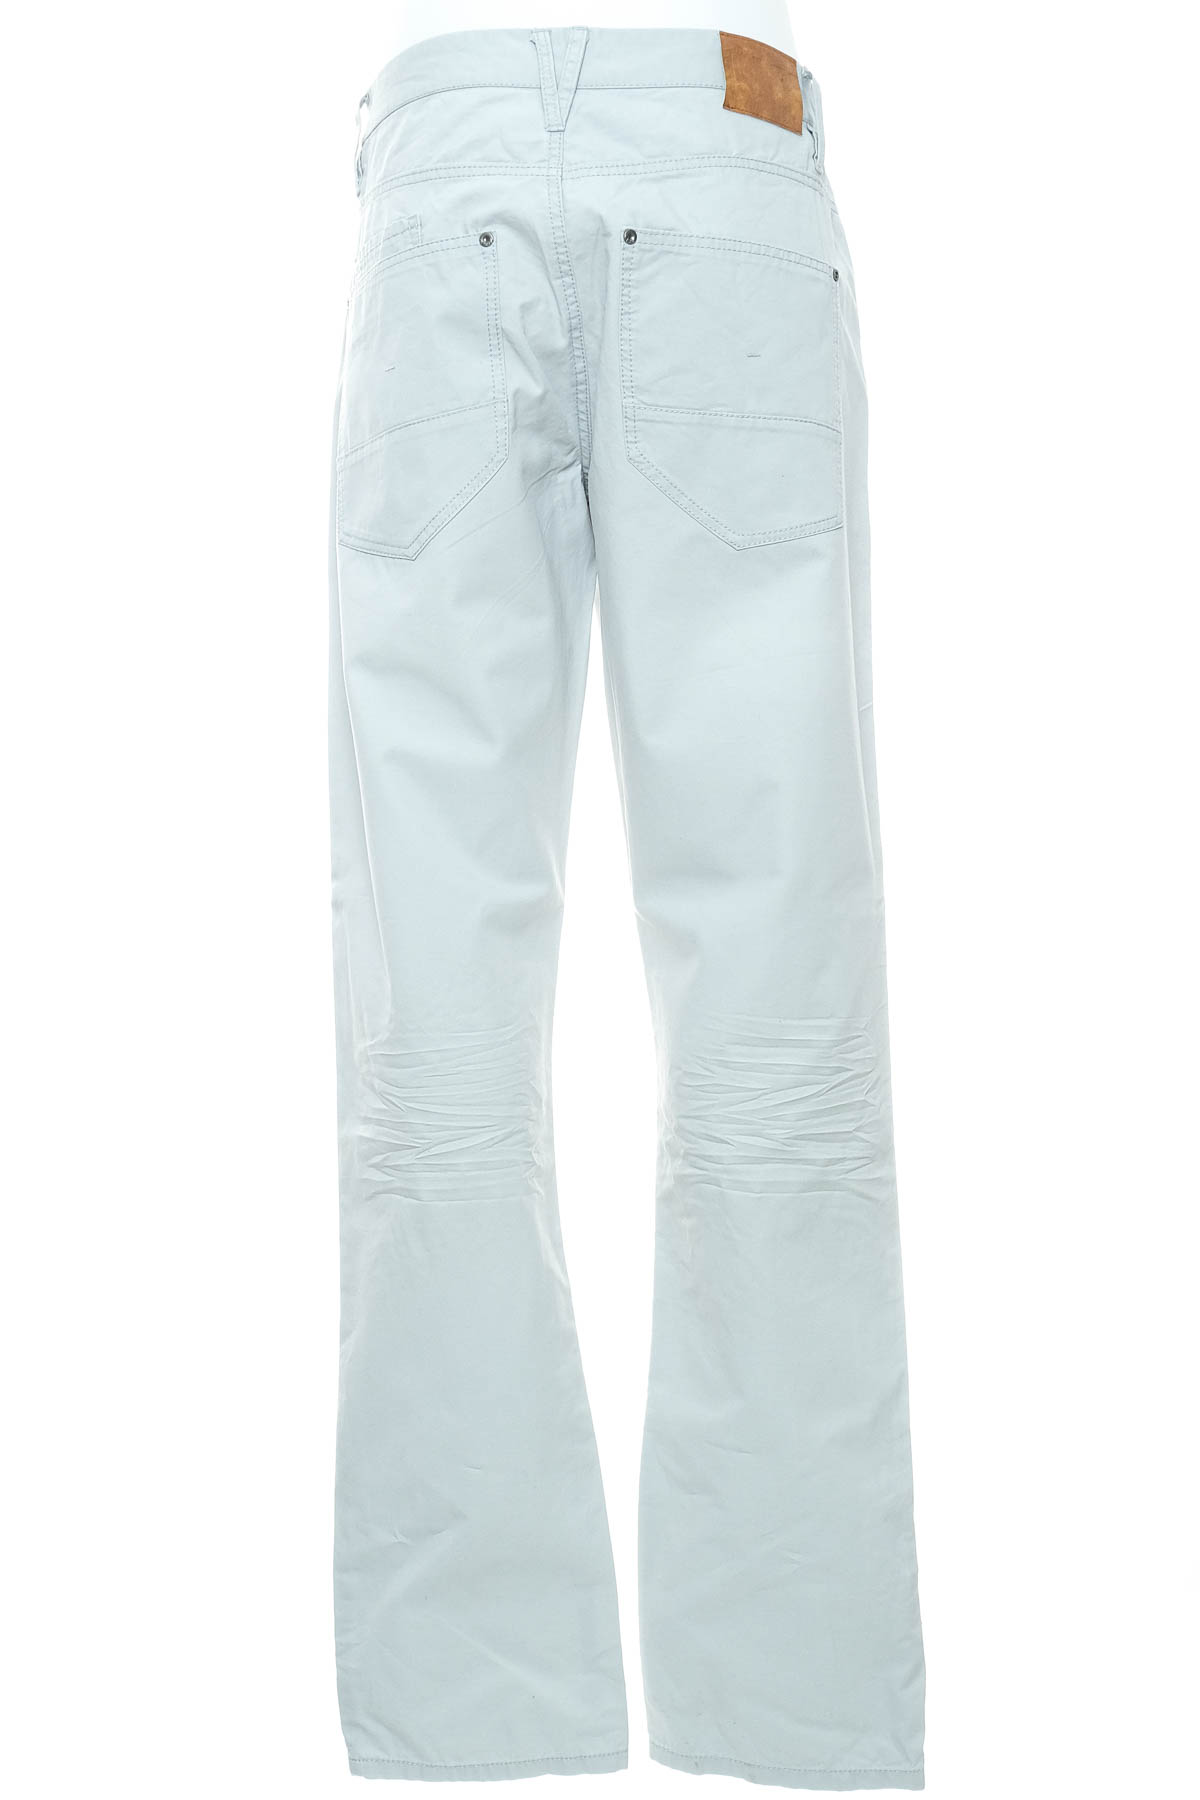 Pantalon pentru bărbați - JBC - 1